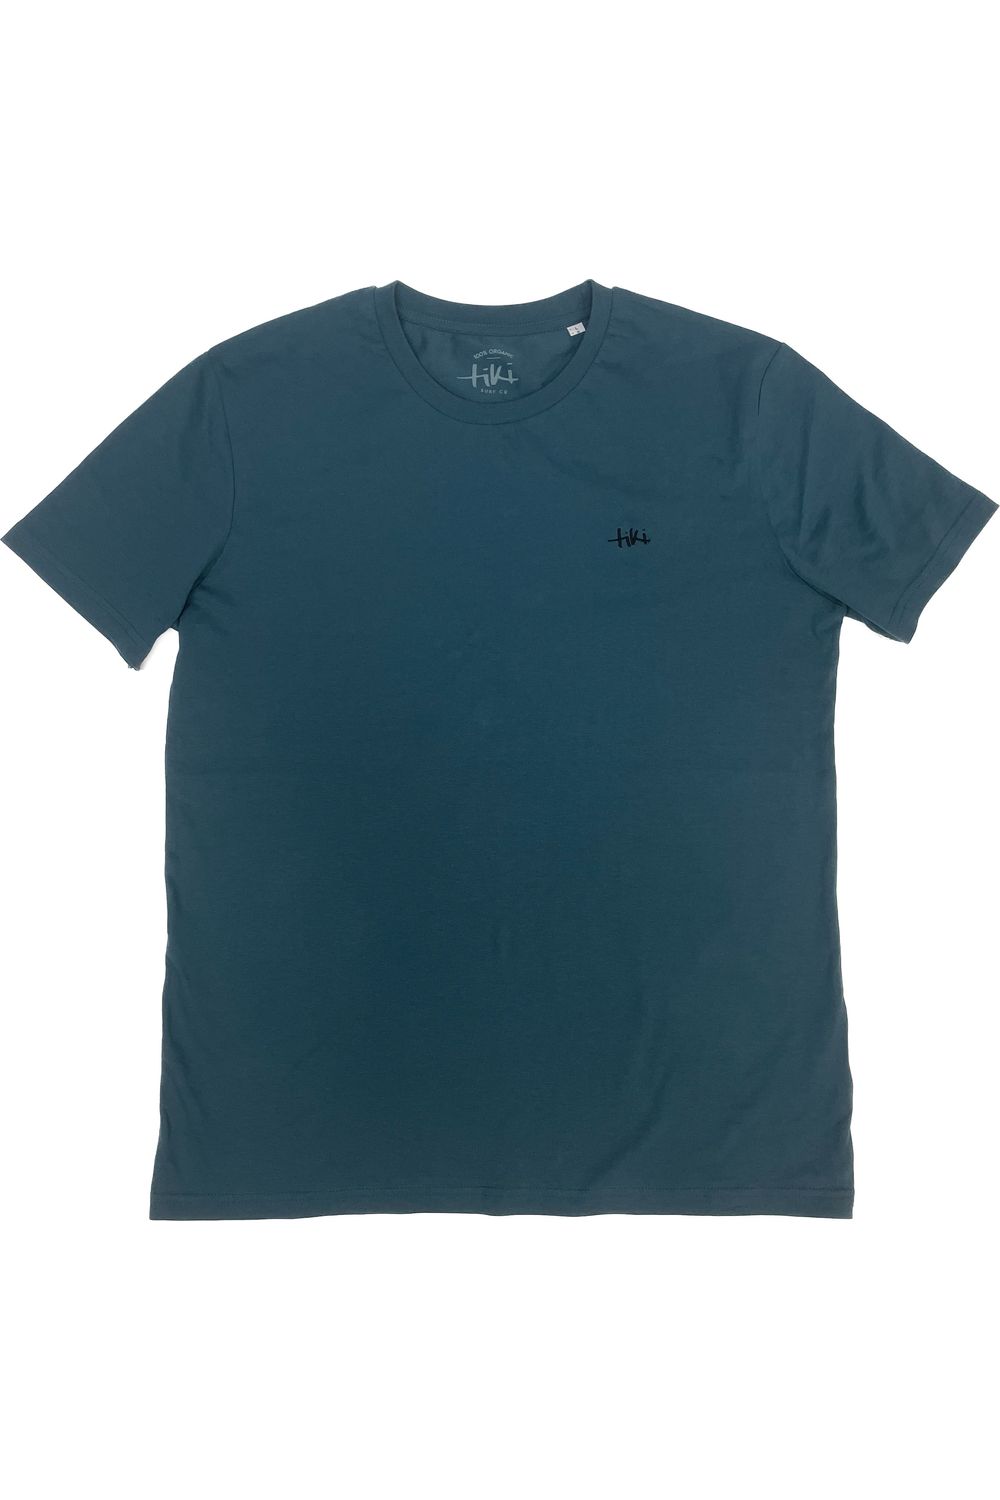 Tiki Unisex Classic Short Sleeve T-Shirt Stargazer